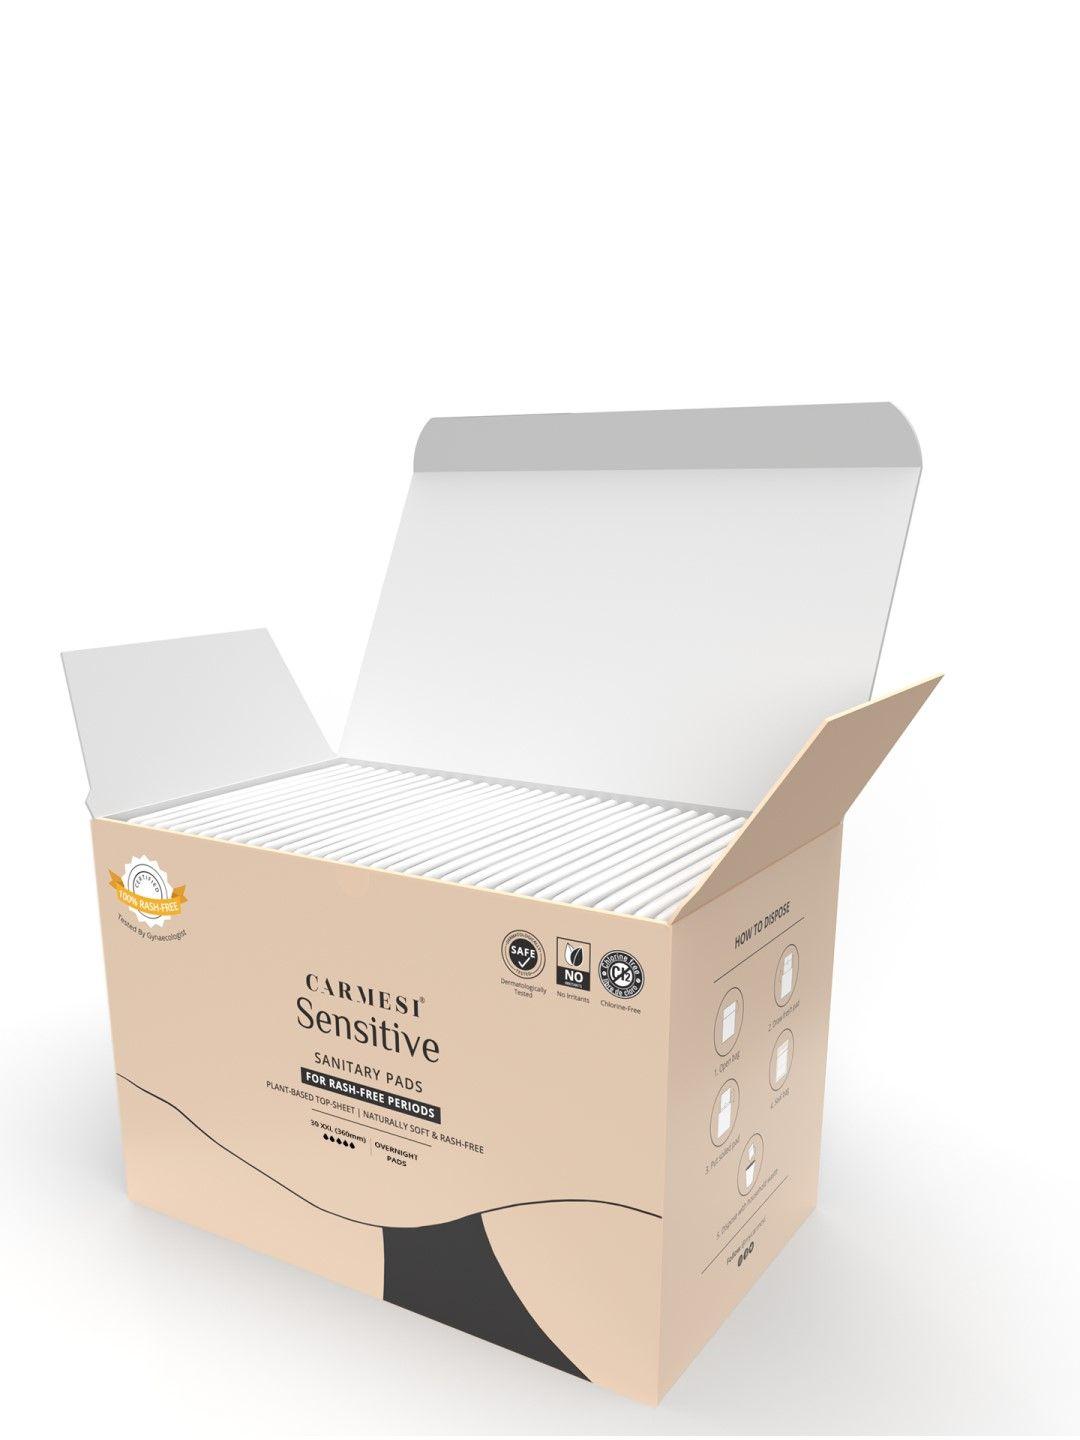 carmesi sensitive sanitary pads - box of 30 xxl